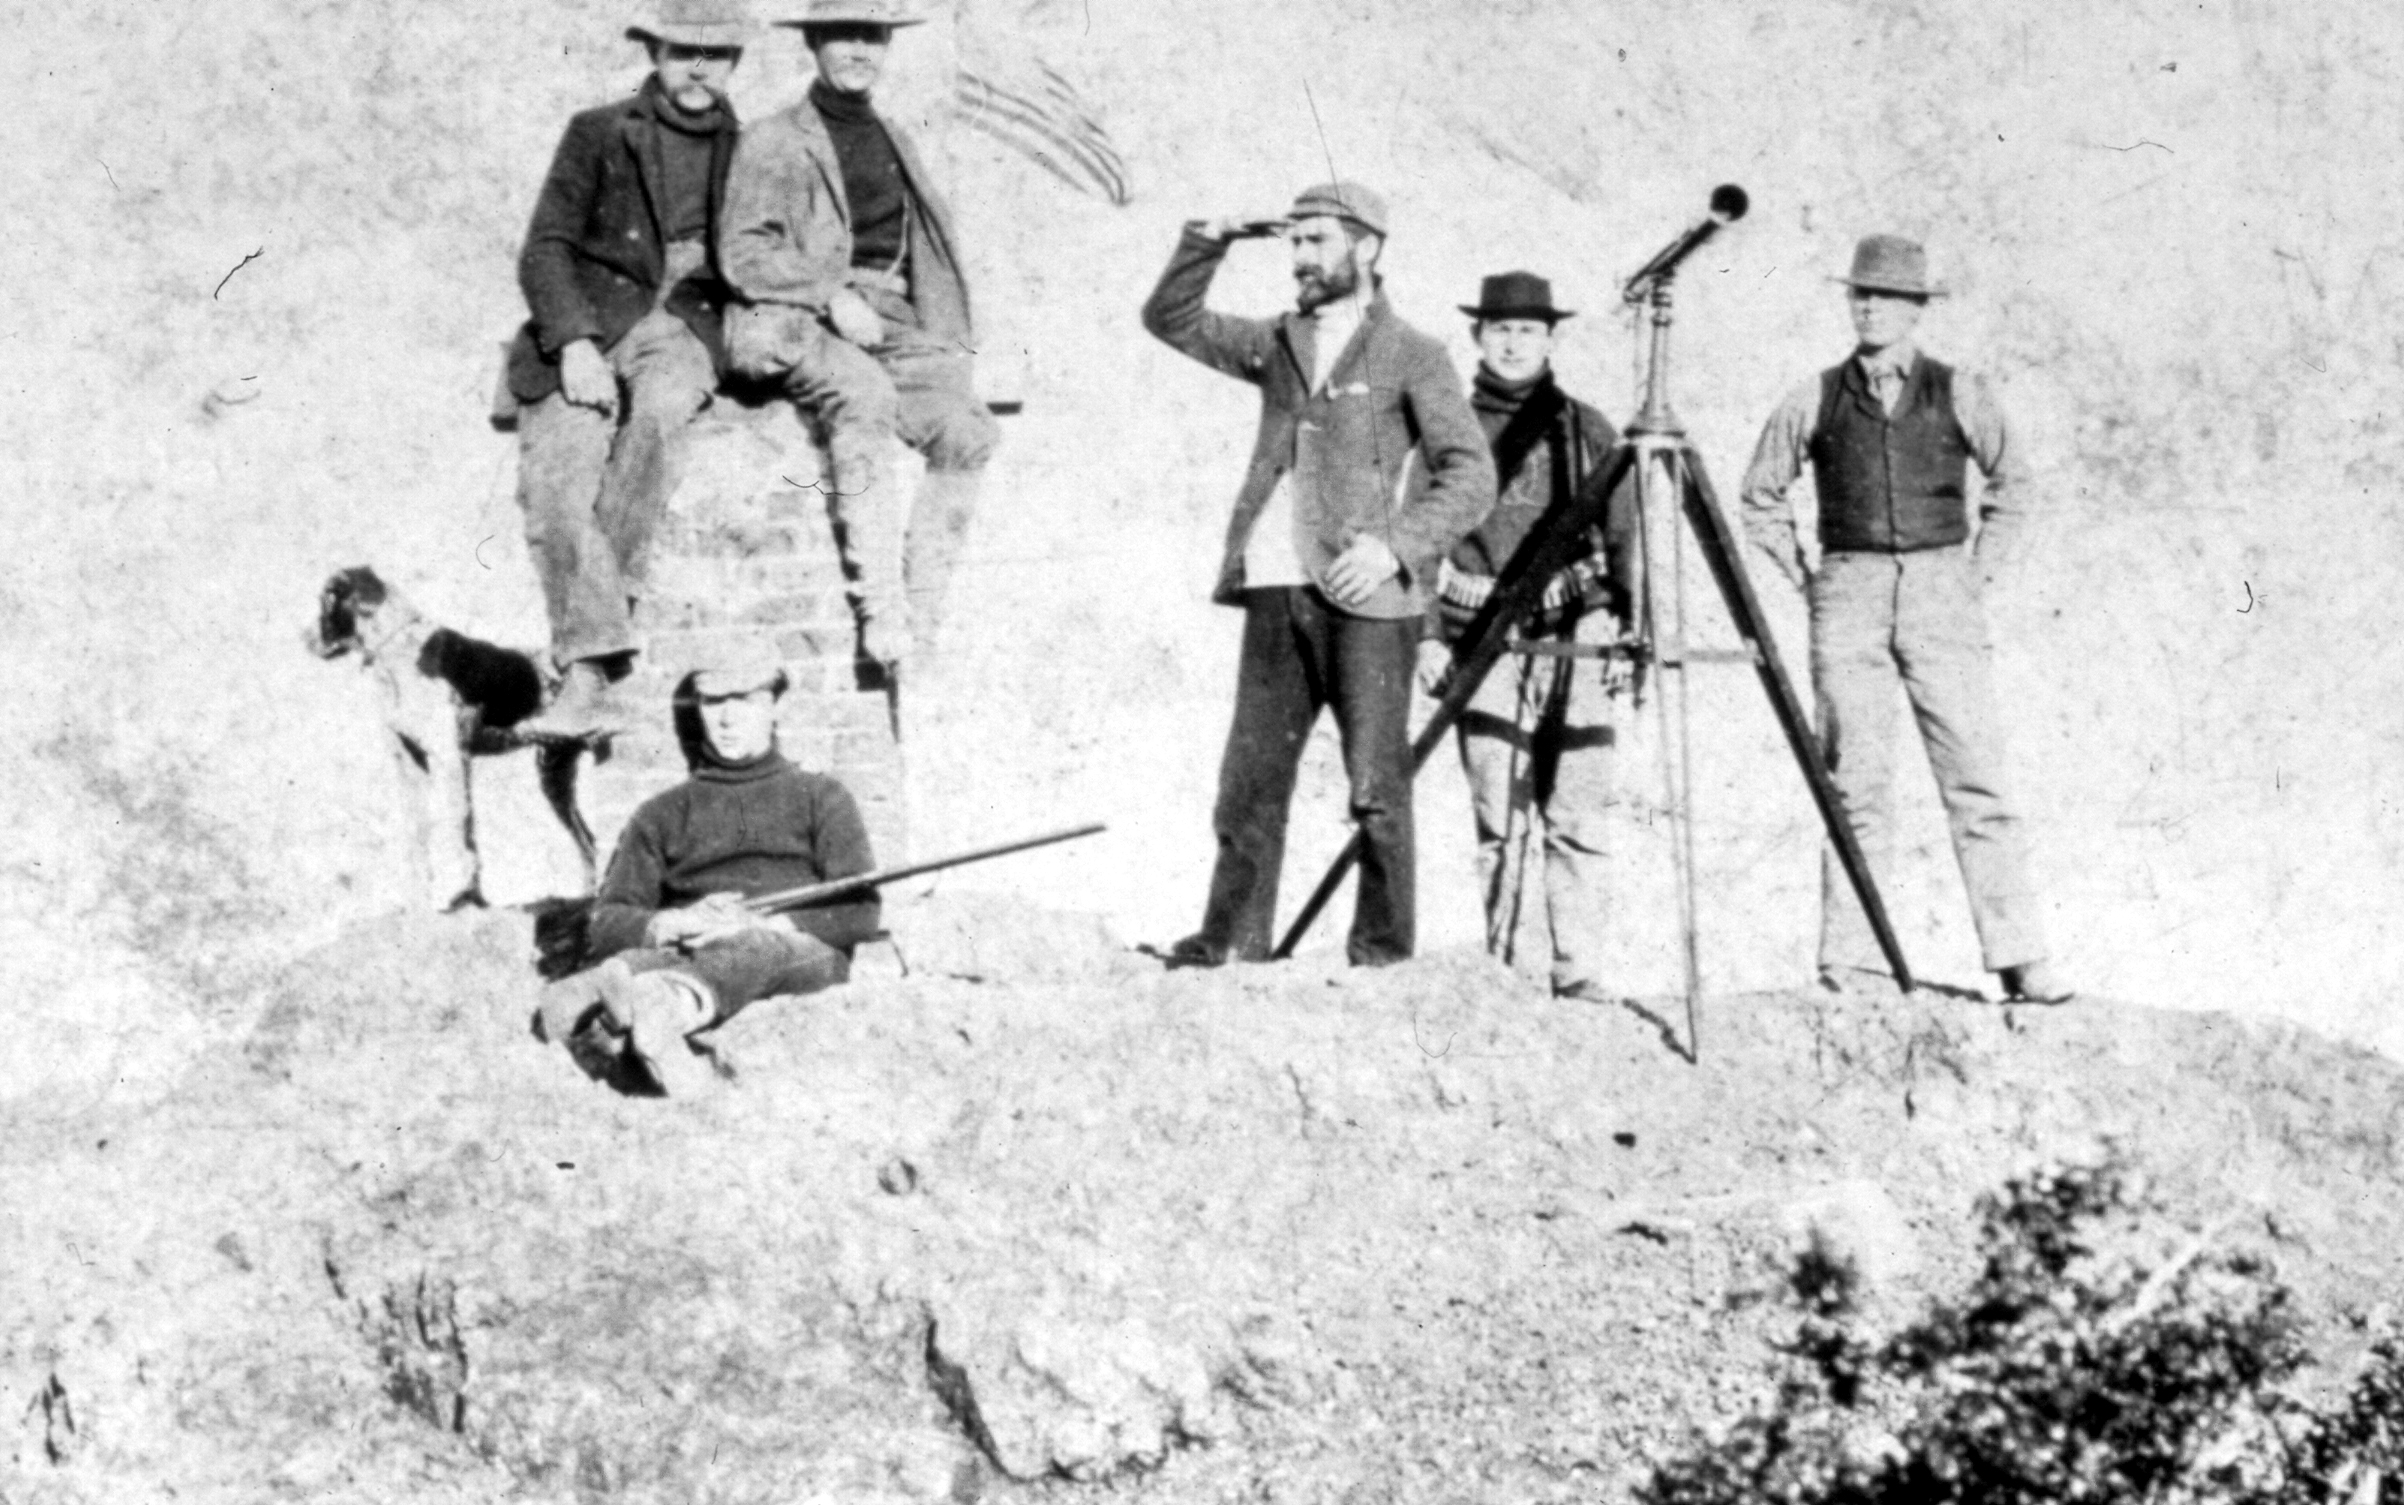 1896 Alpine Hiking Club on Mount Diablo by Mike Dillon